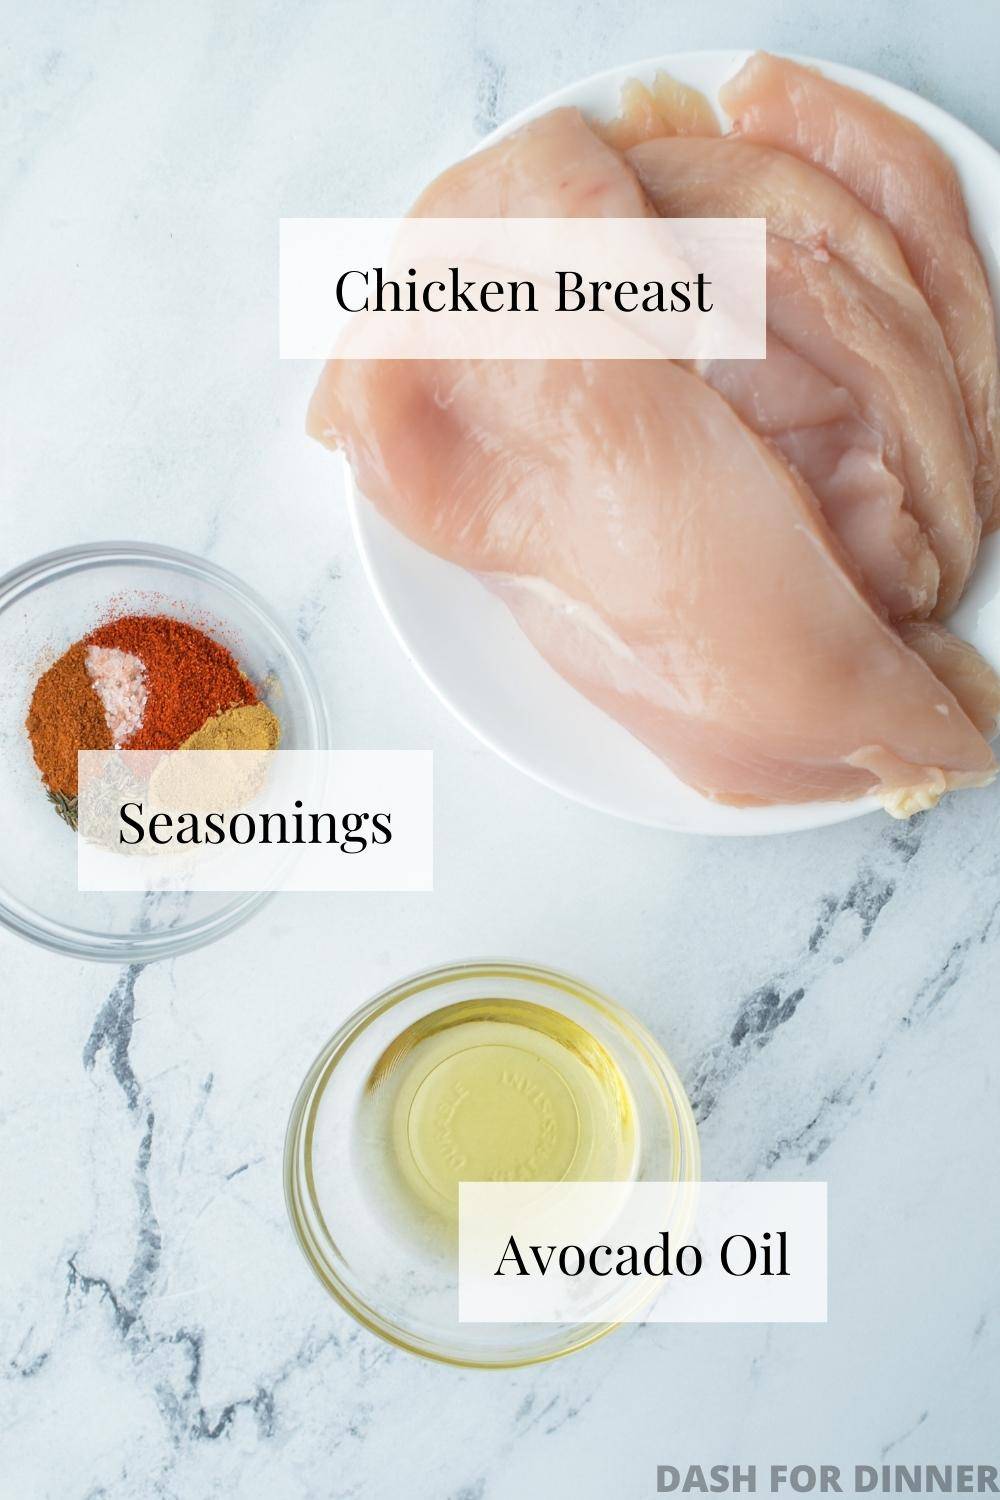 Chicken breast, avocado oil, and seasonings.